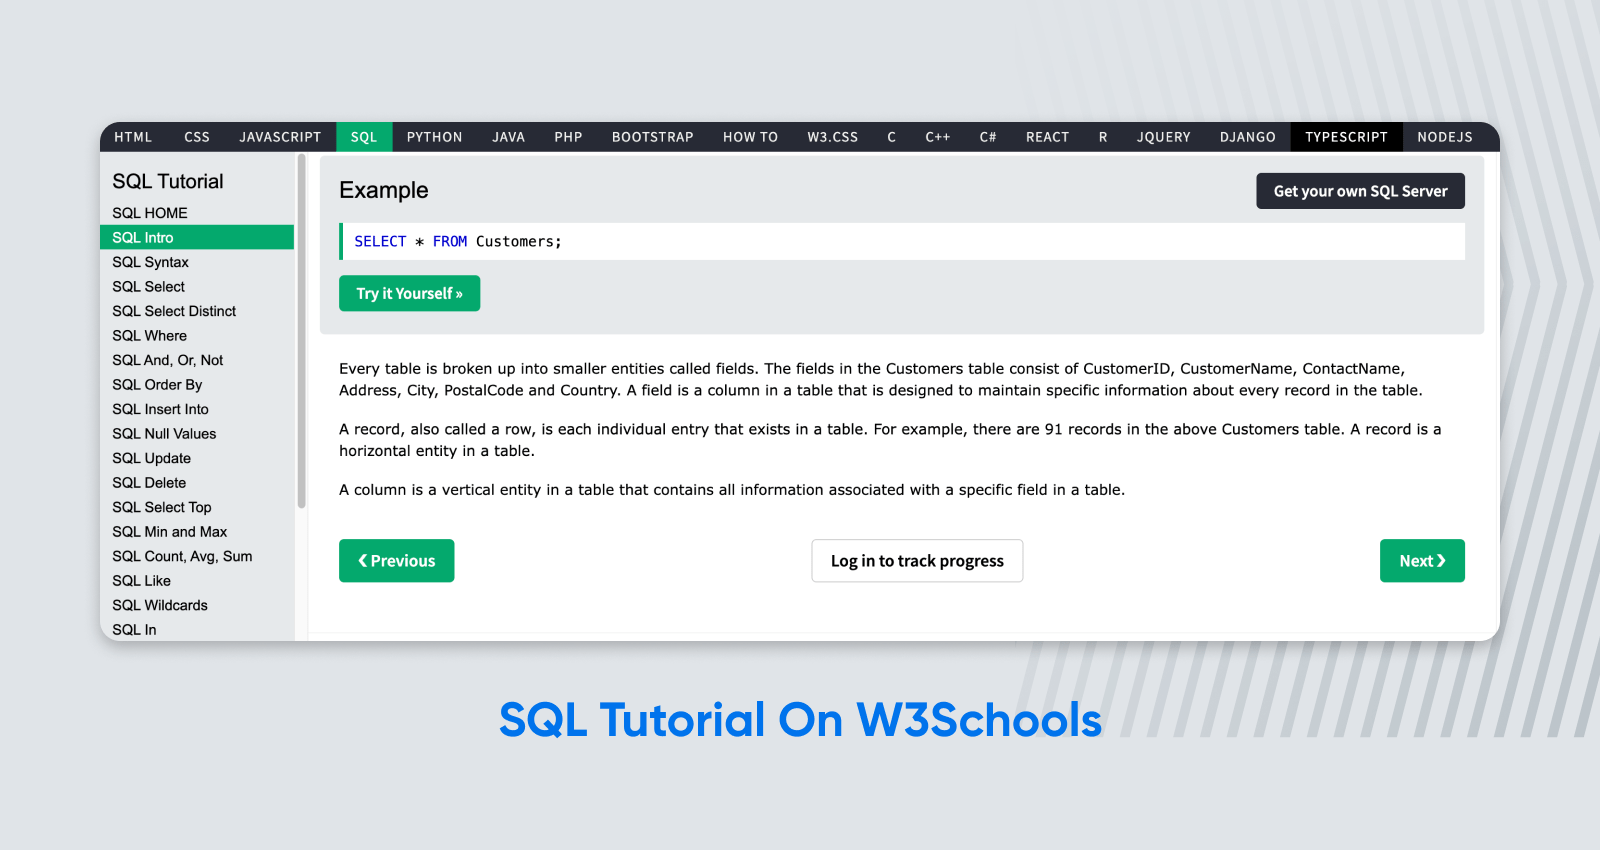 SQL Tutorial on W3Schools